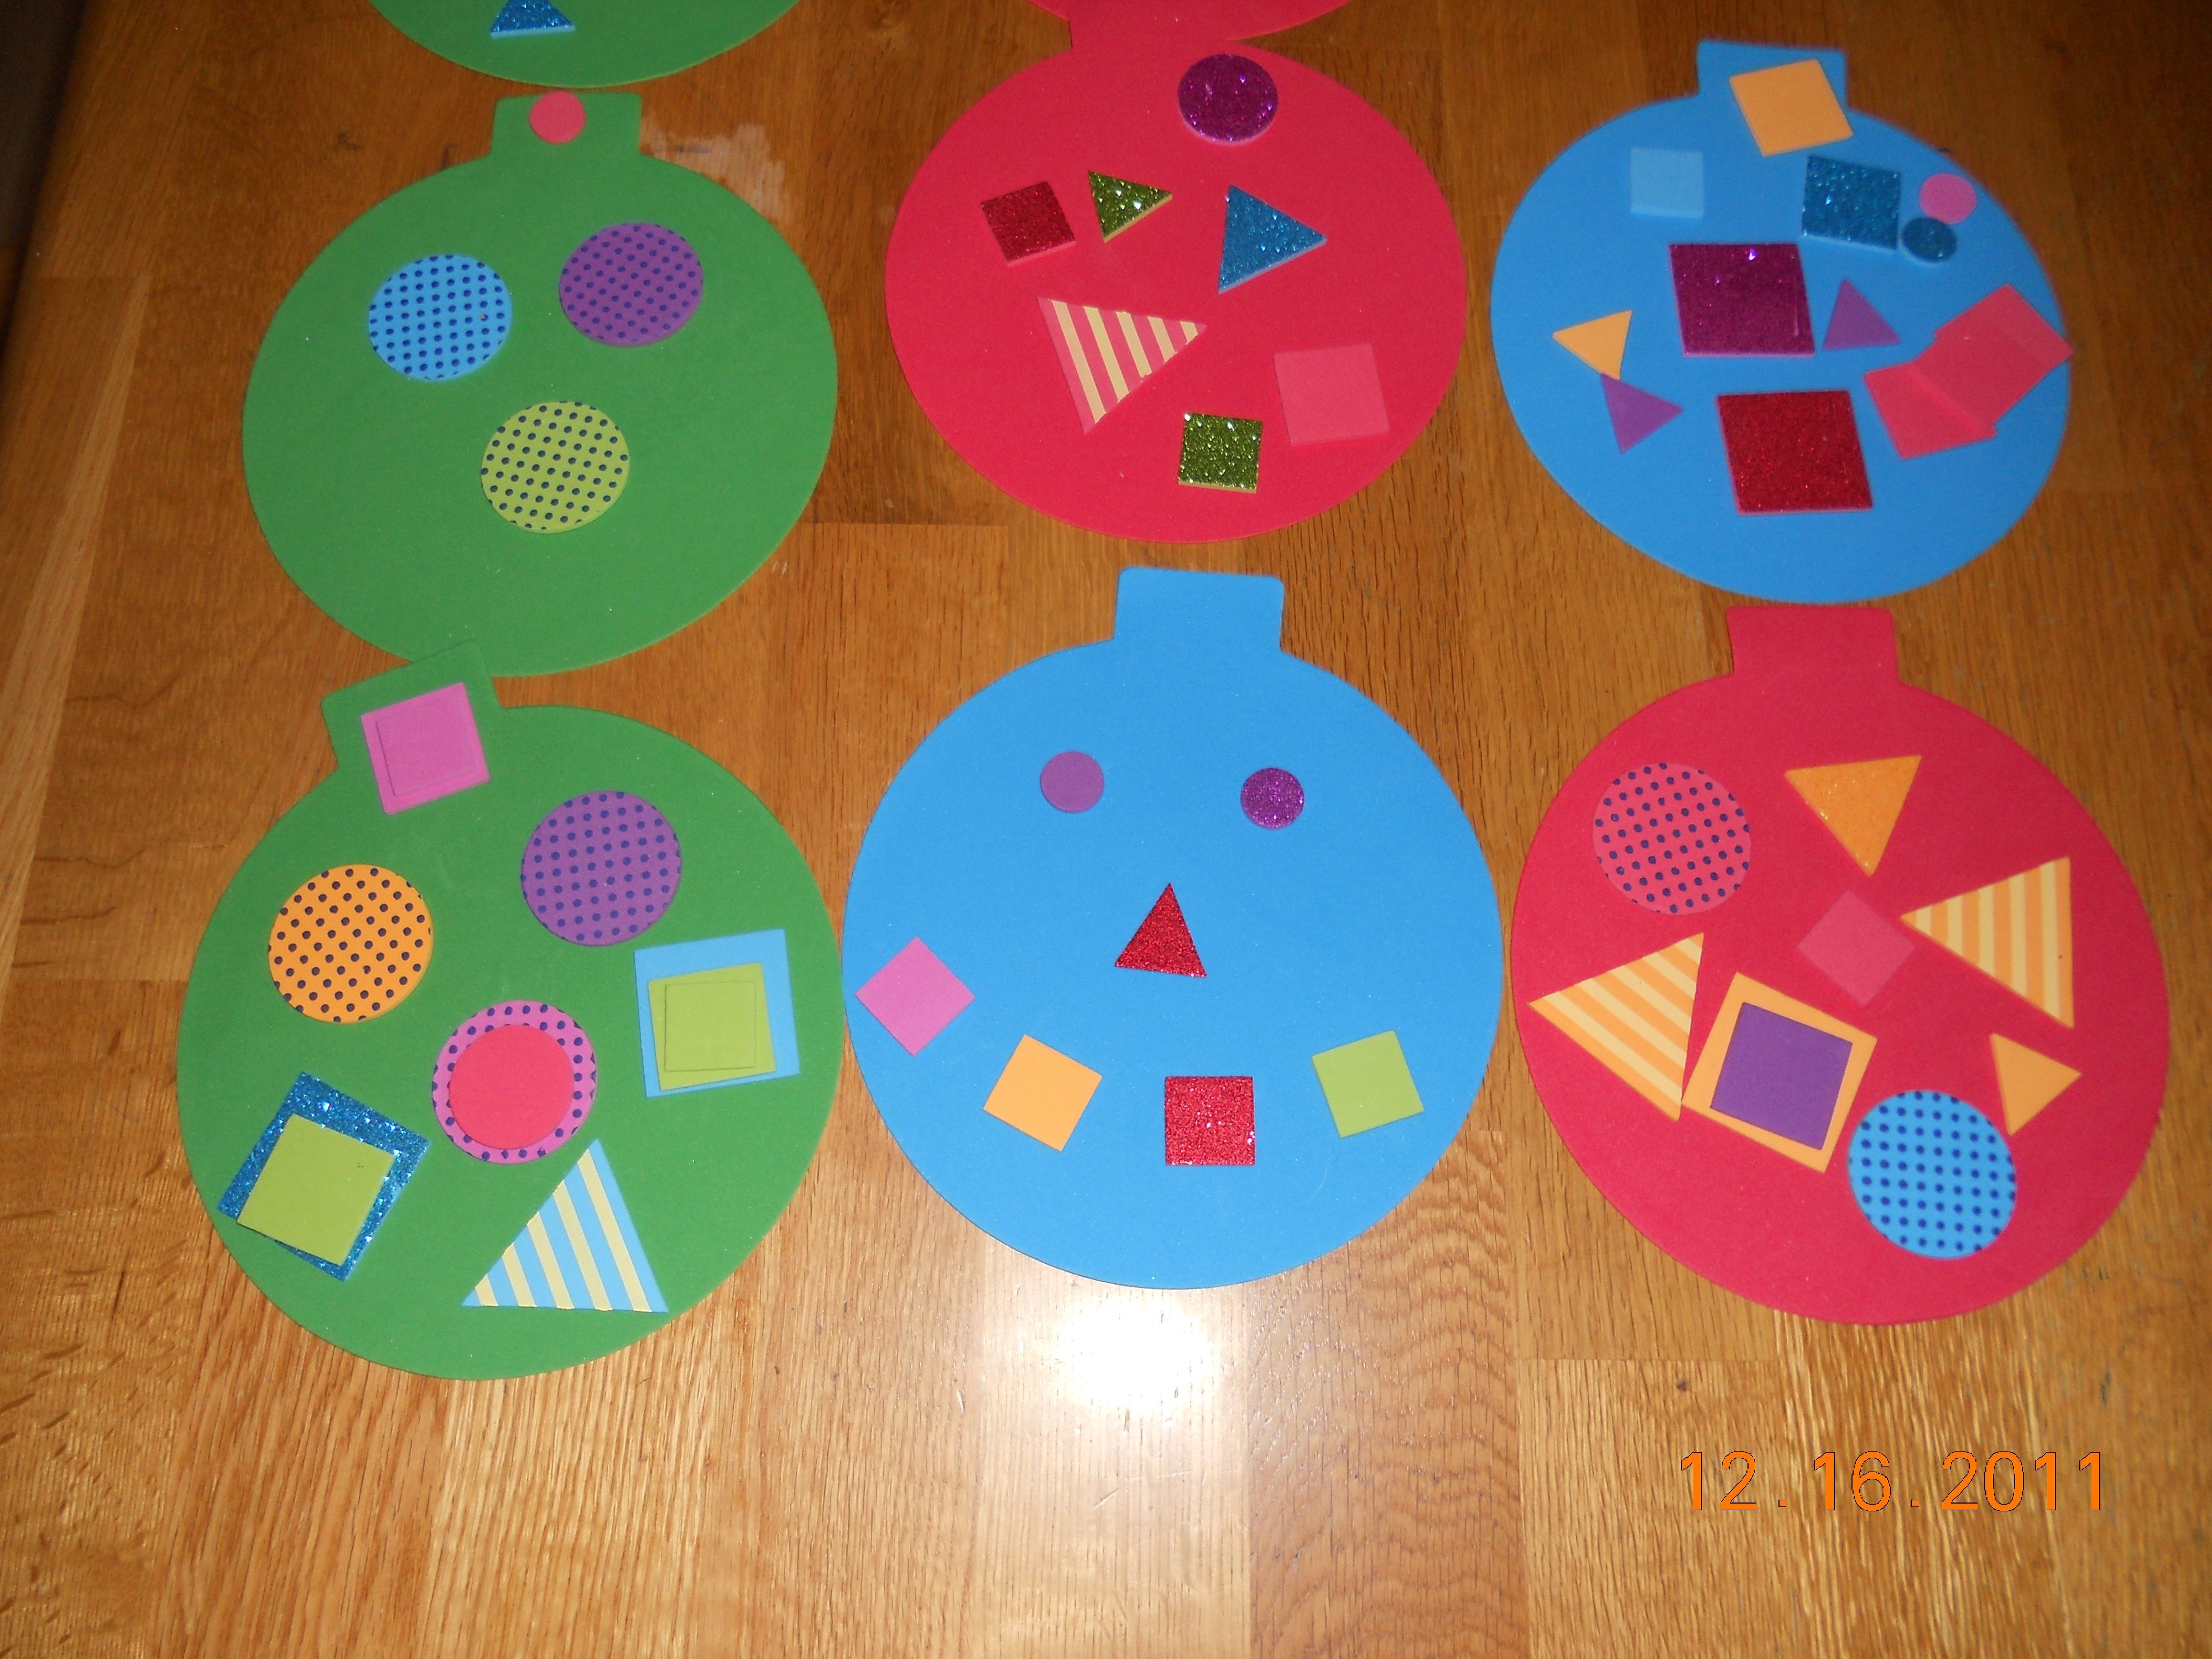 10 Nice Christmas Craft Ideas For Kids 15 fun and easy christmas craft ideas for kids miss lassy 2 2022